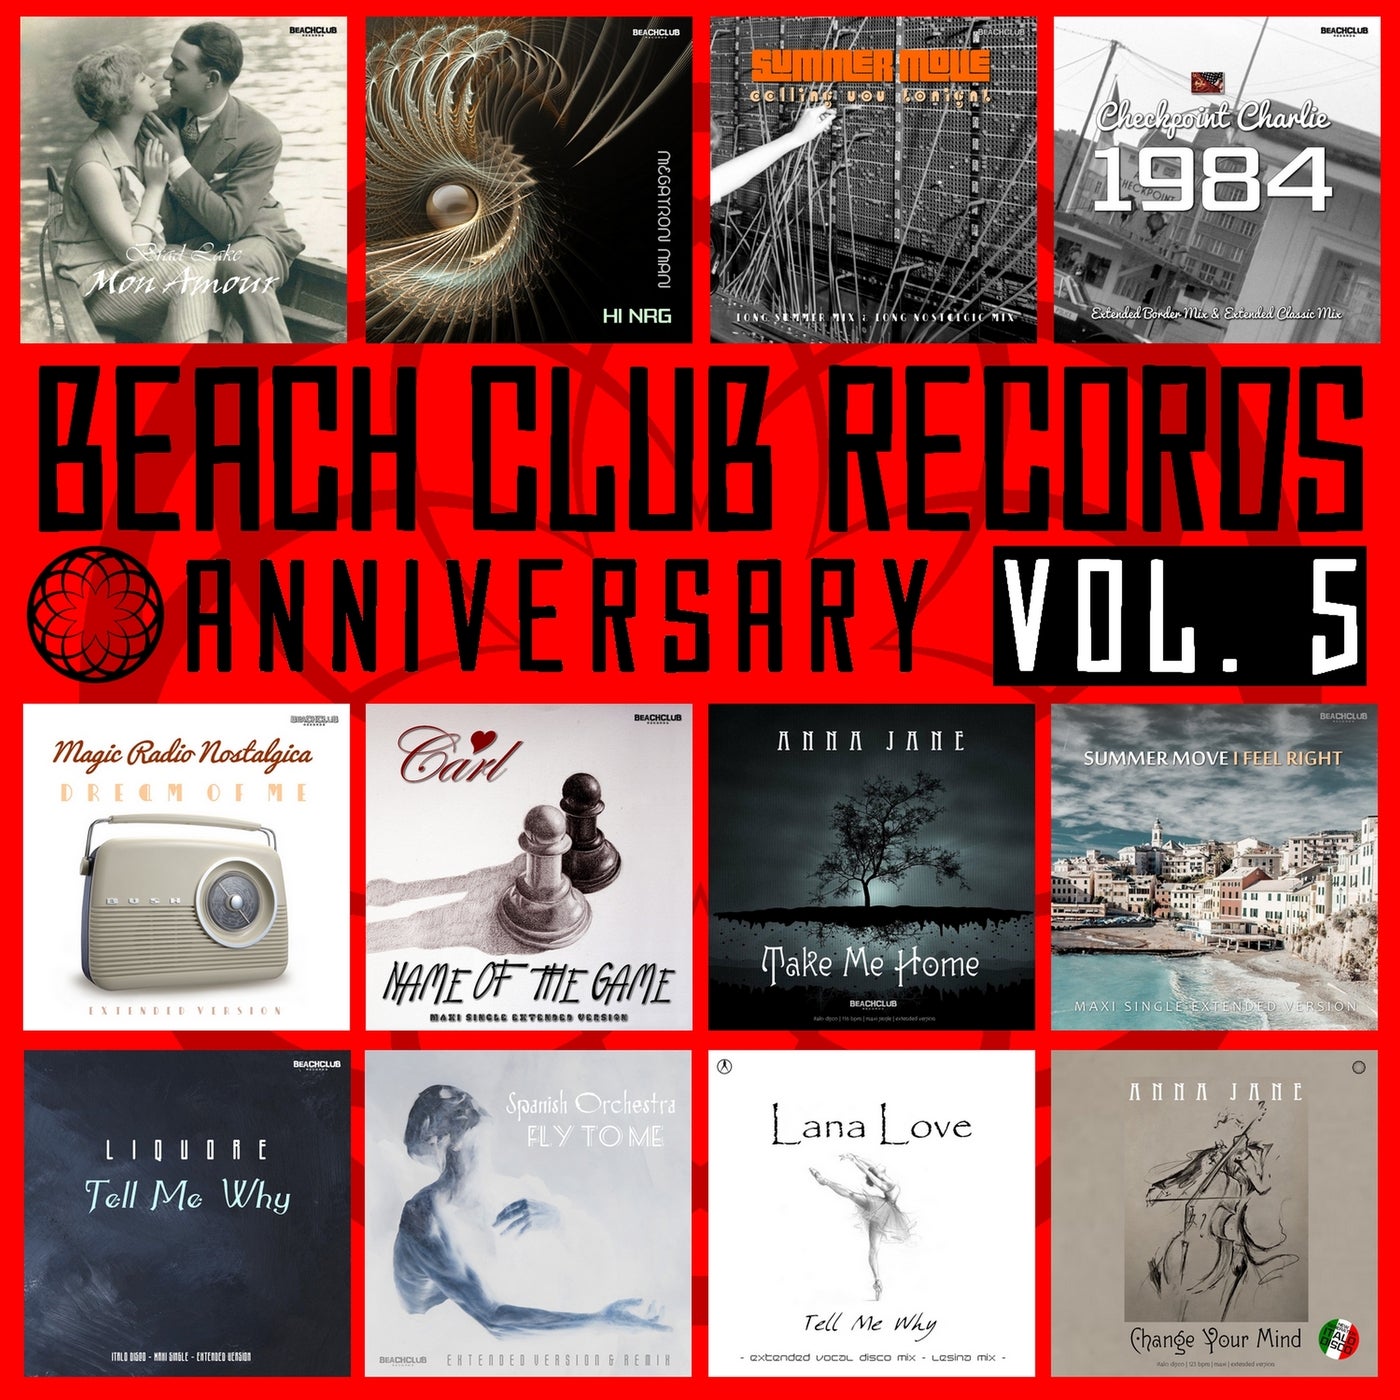 Beach Club Records Anniversary, Vol. 5